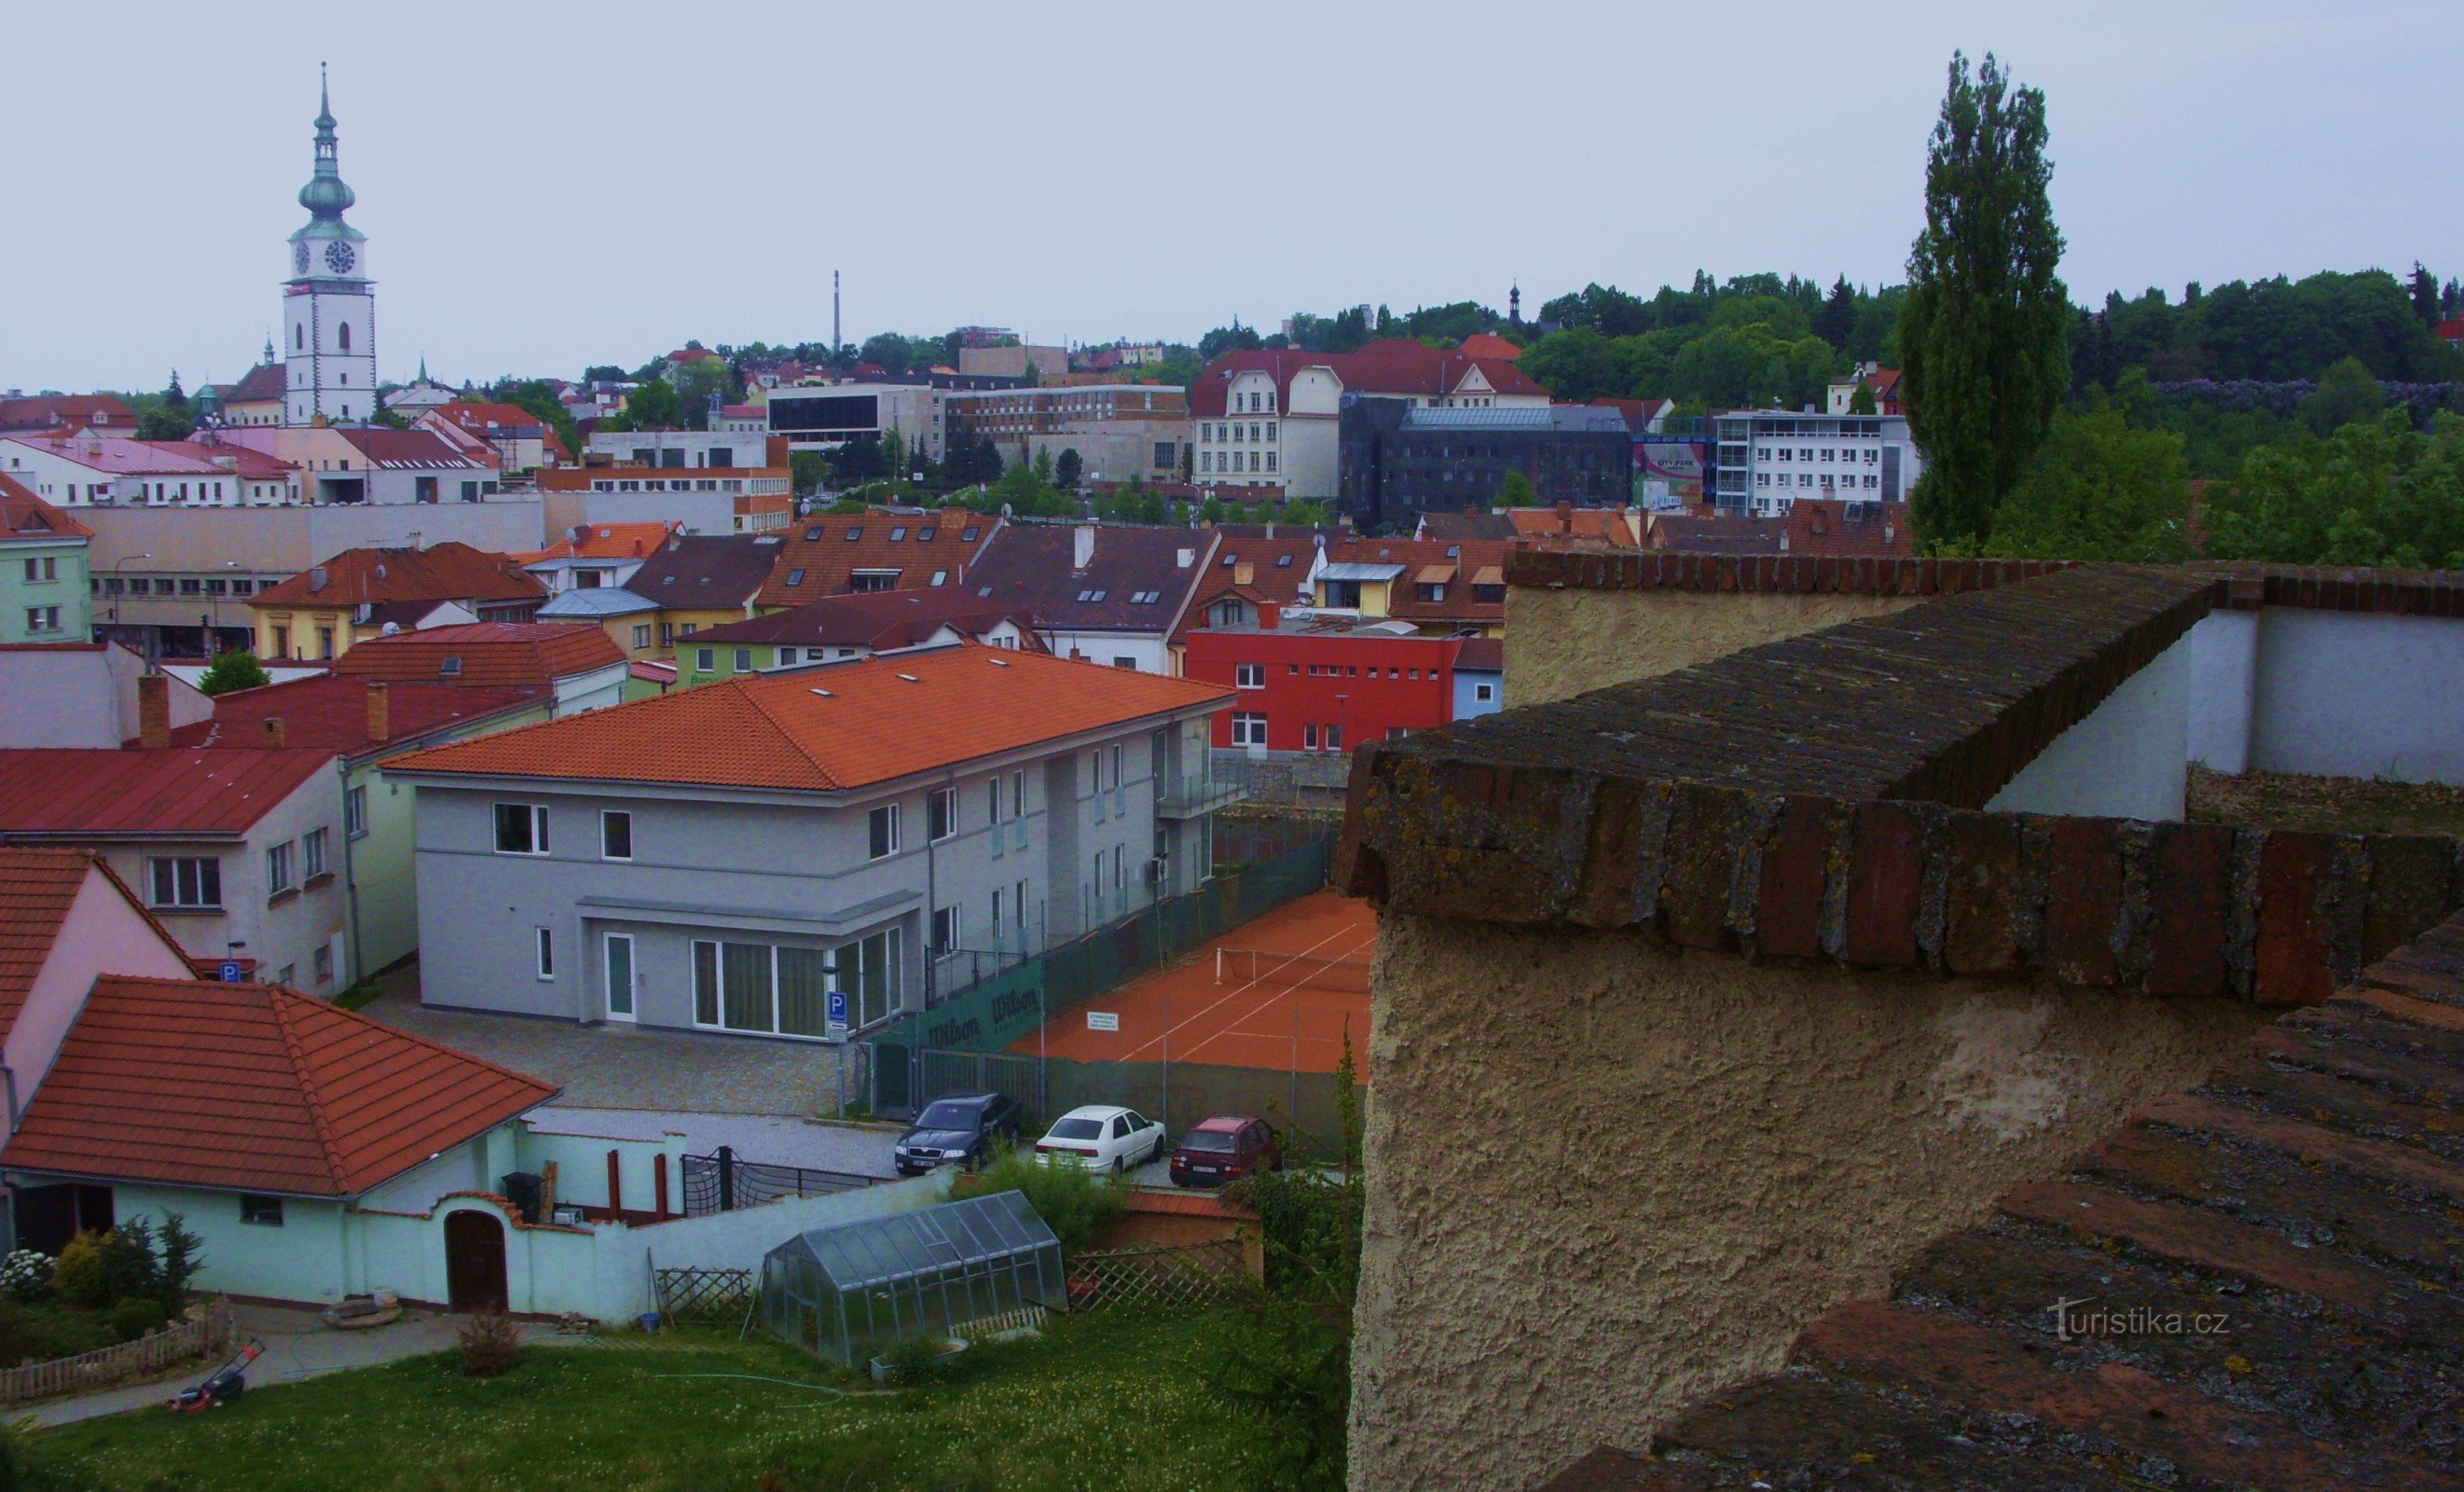 A walk through the city Náměšť nad Oslavou